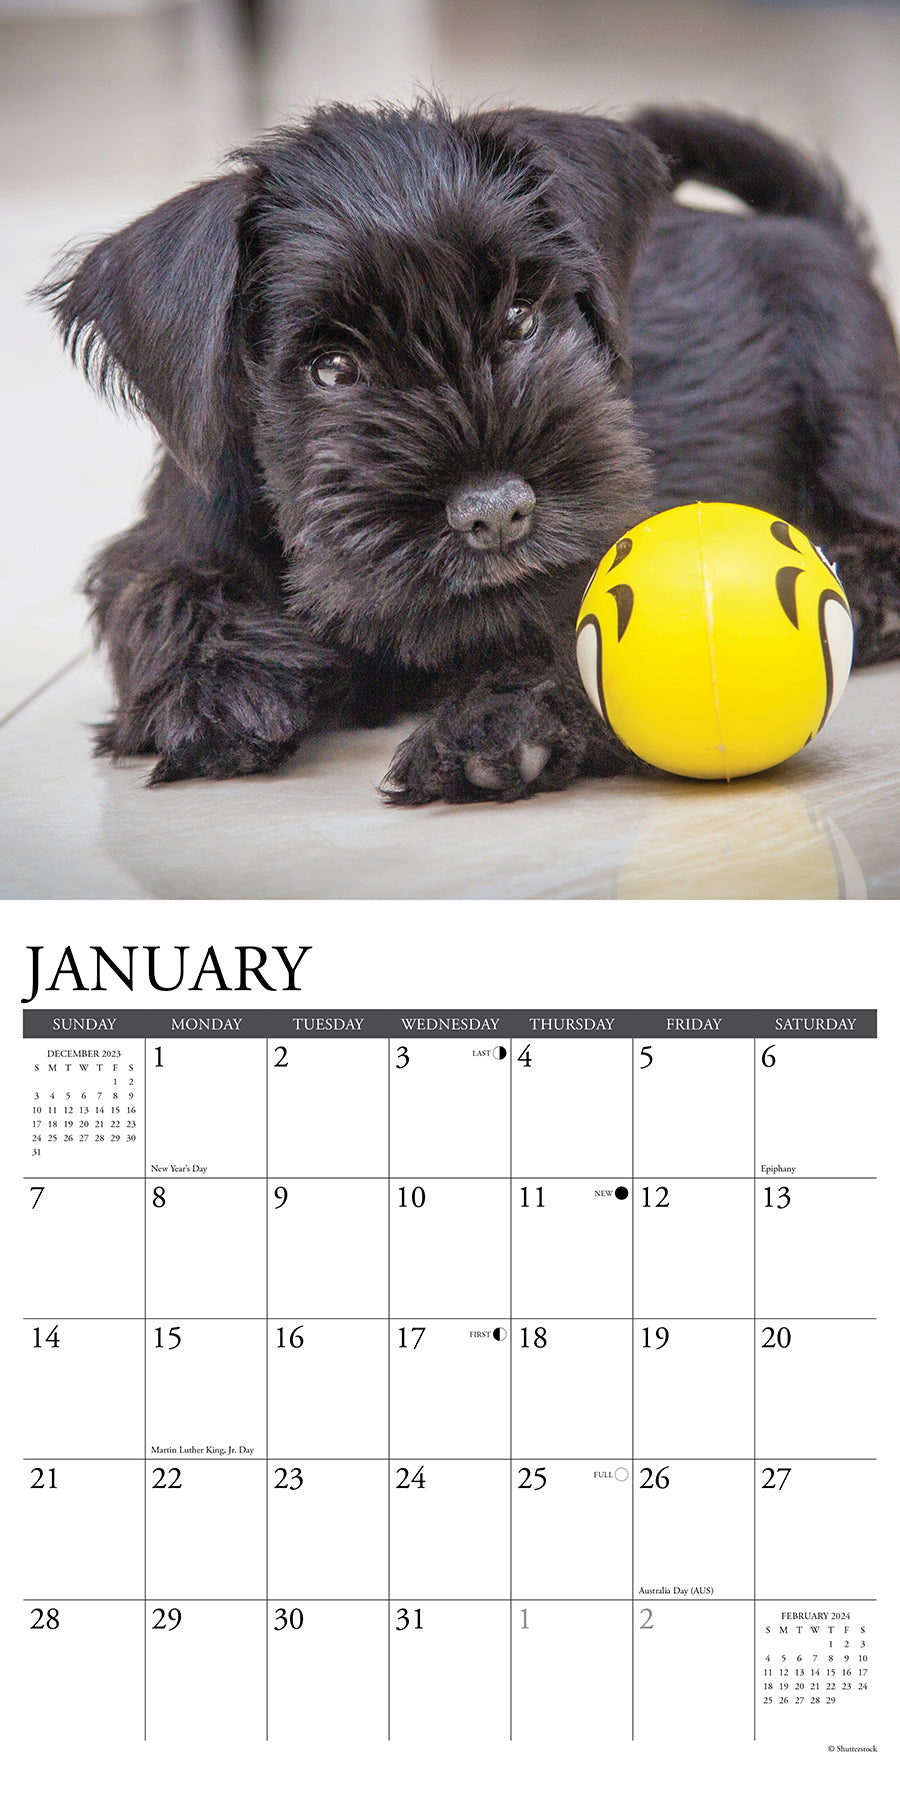 2024 Just Schnauzer Puppies - Square Wall Calendar US